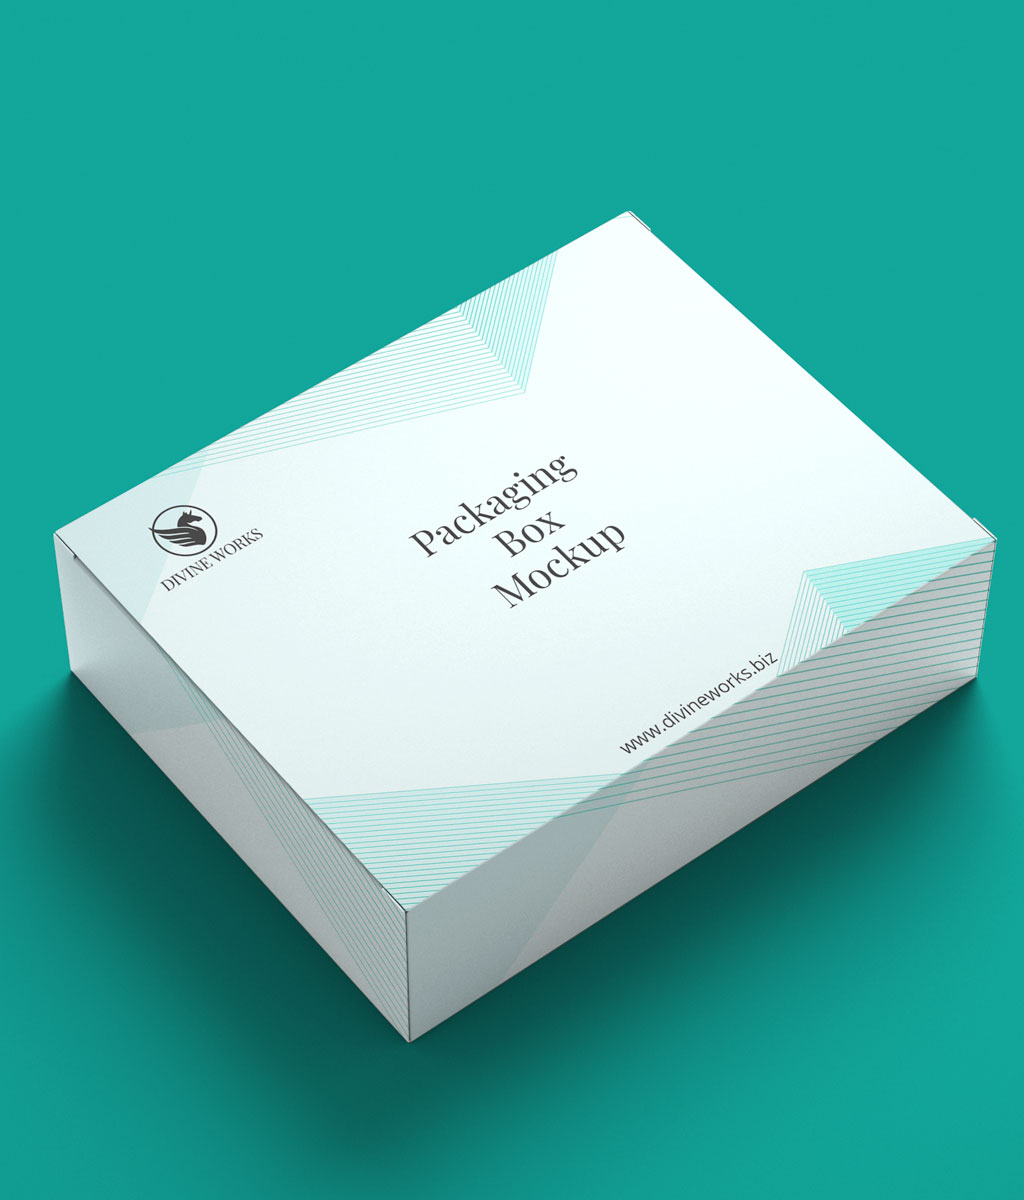 Packaging Box Mockup PSD Free Download